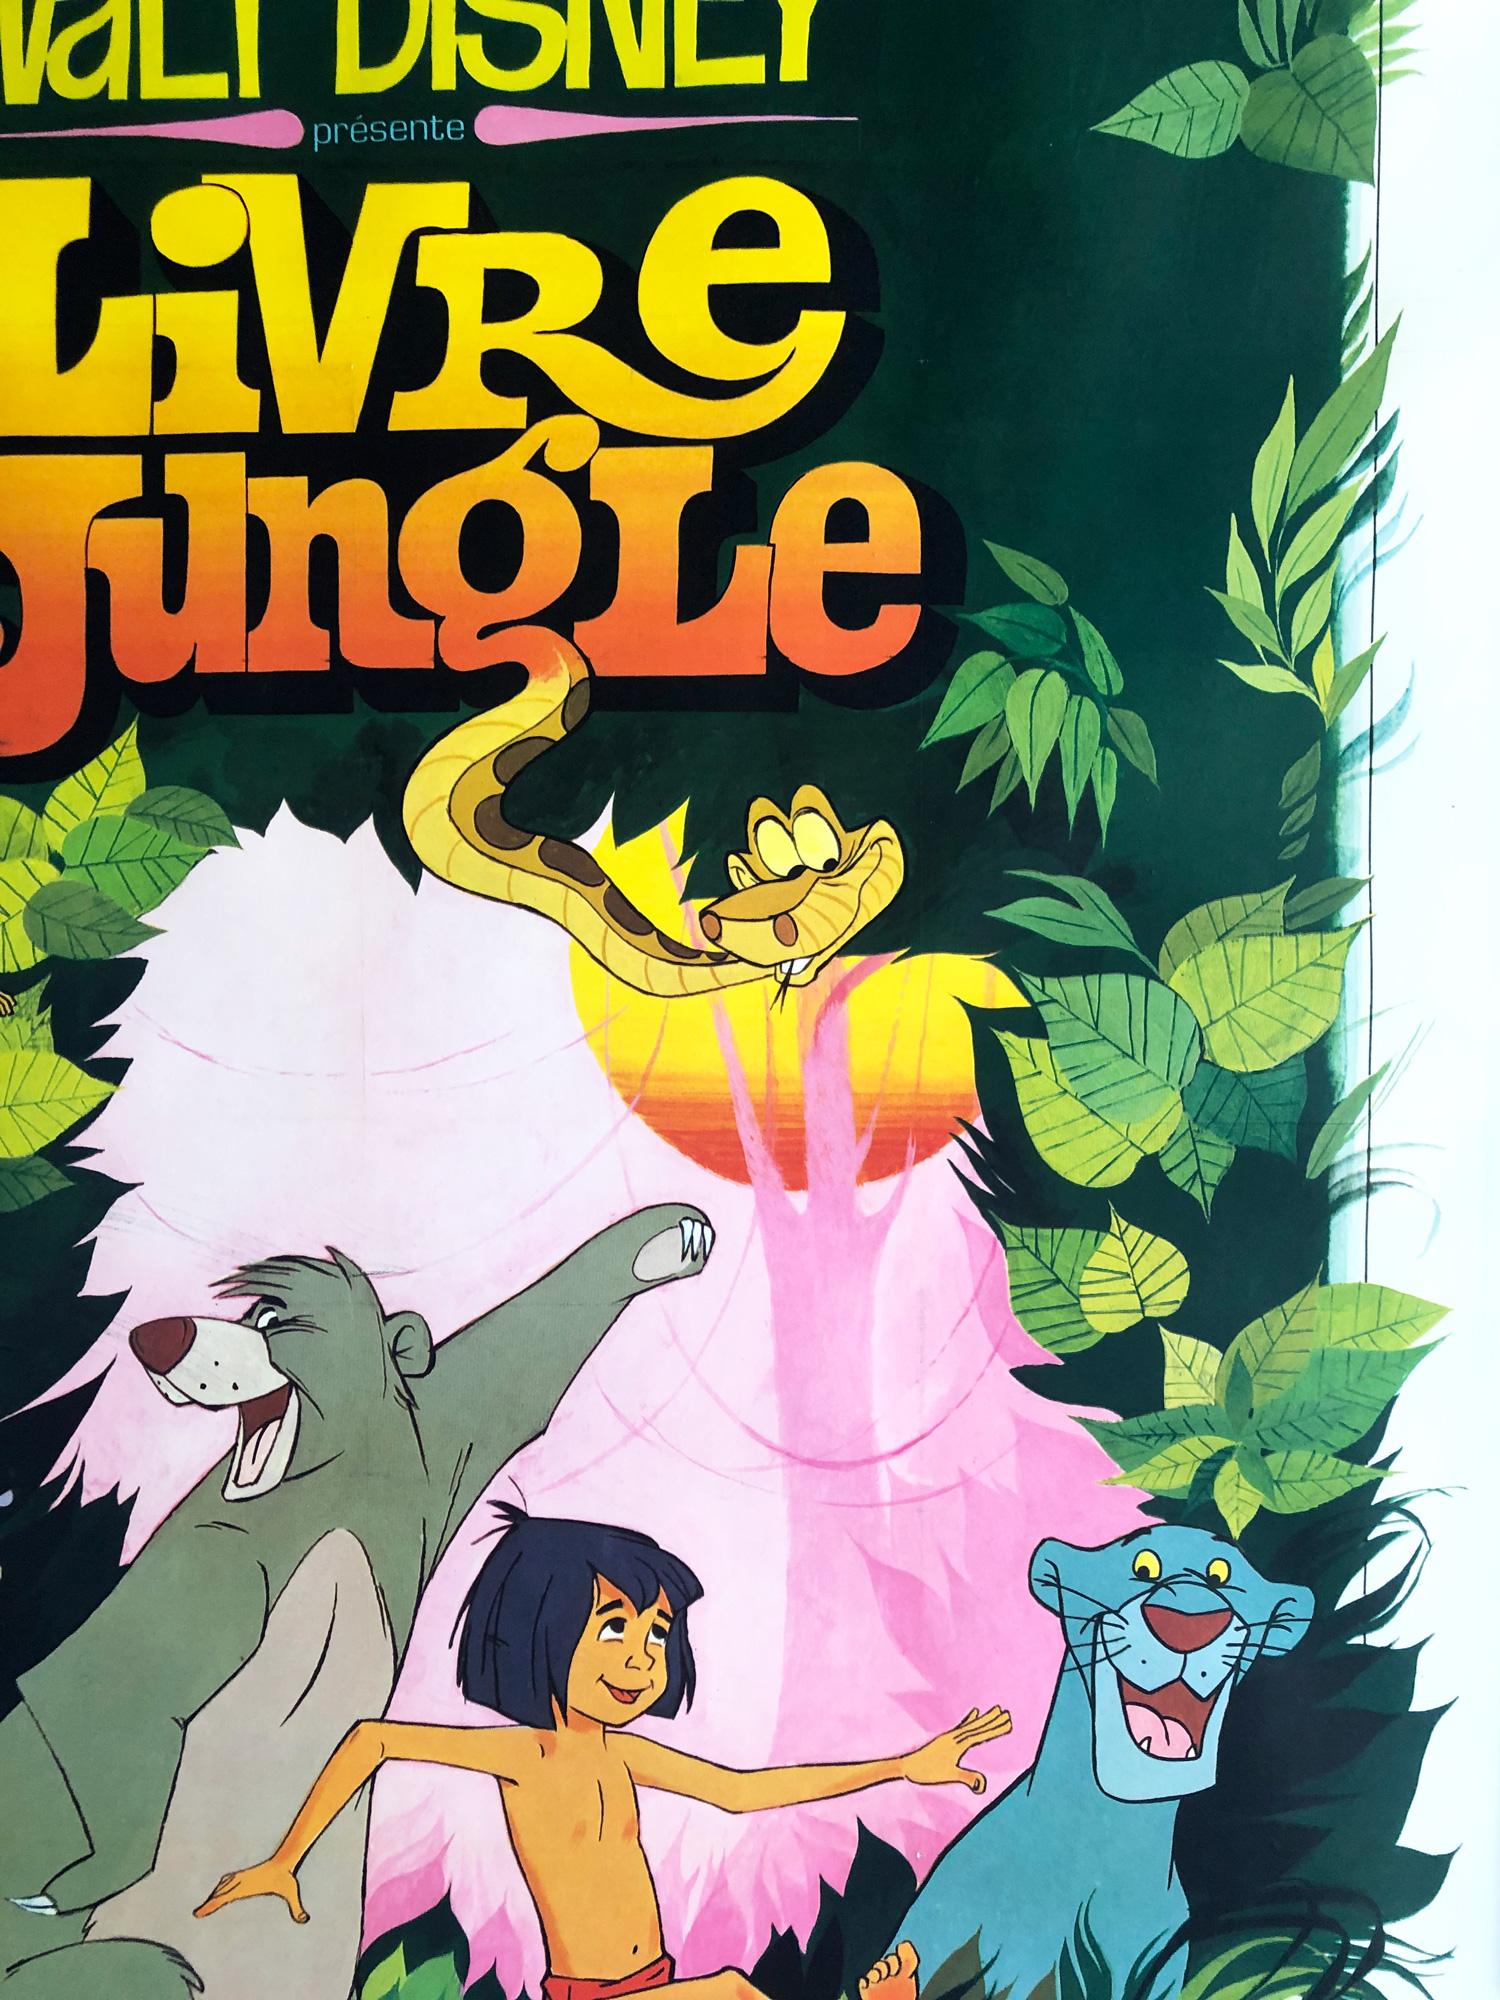 20th Century Jungle Book Original French Grande Film Poster, 1967 For Sale